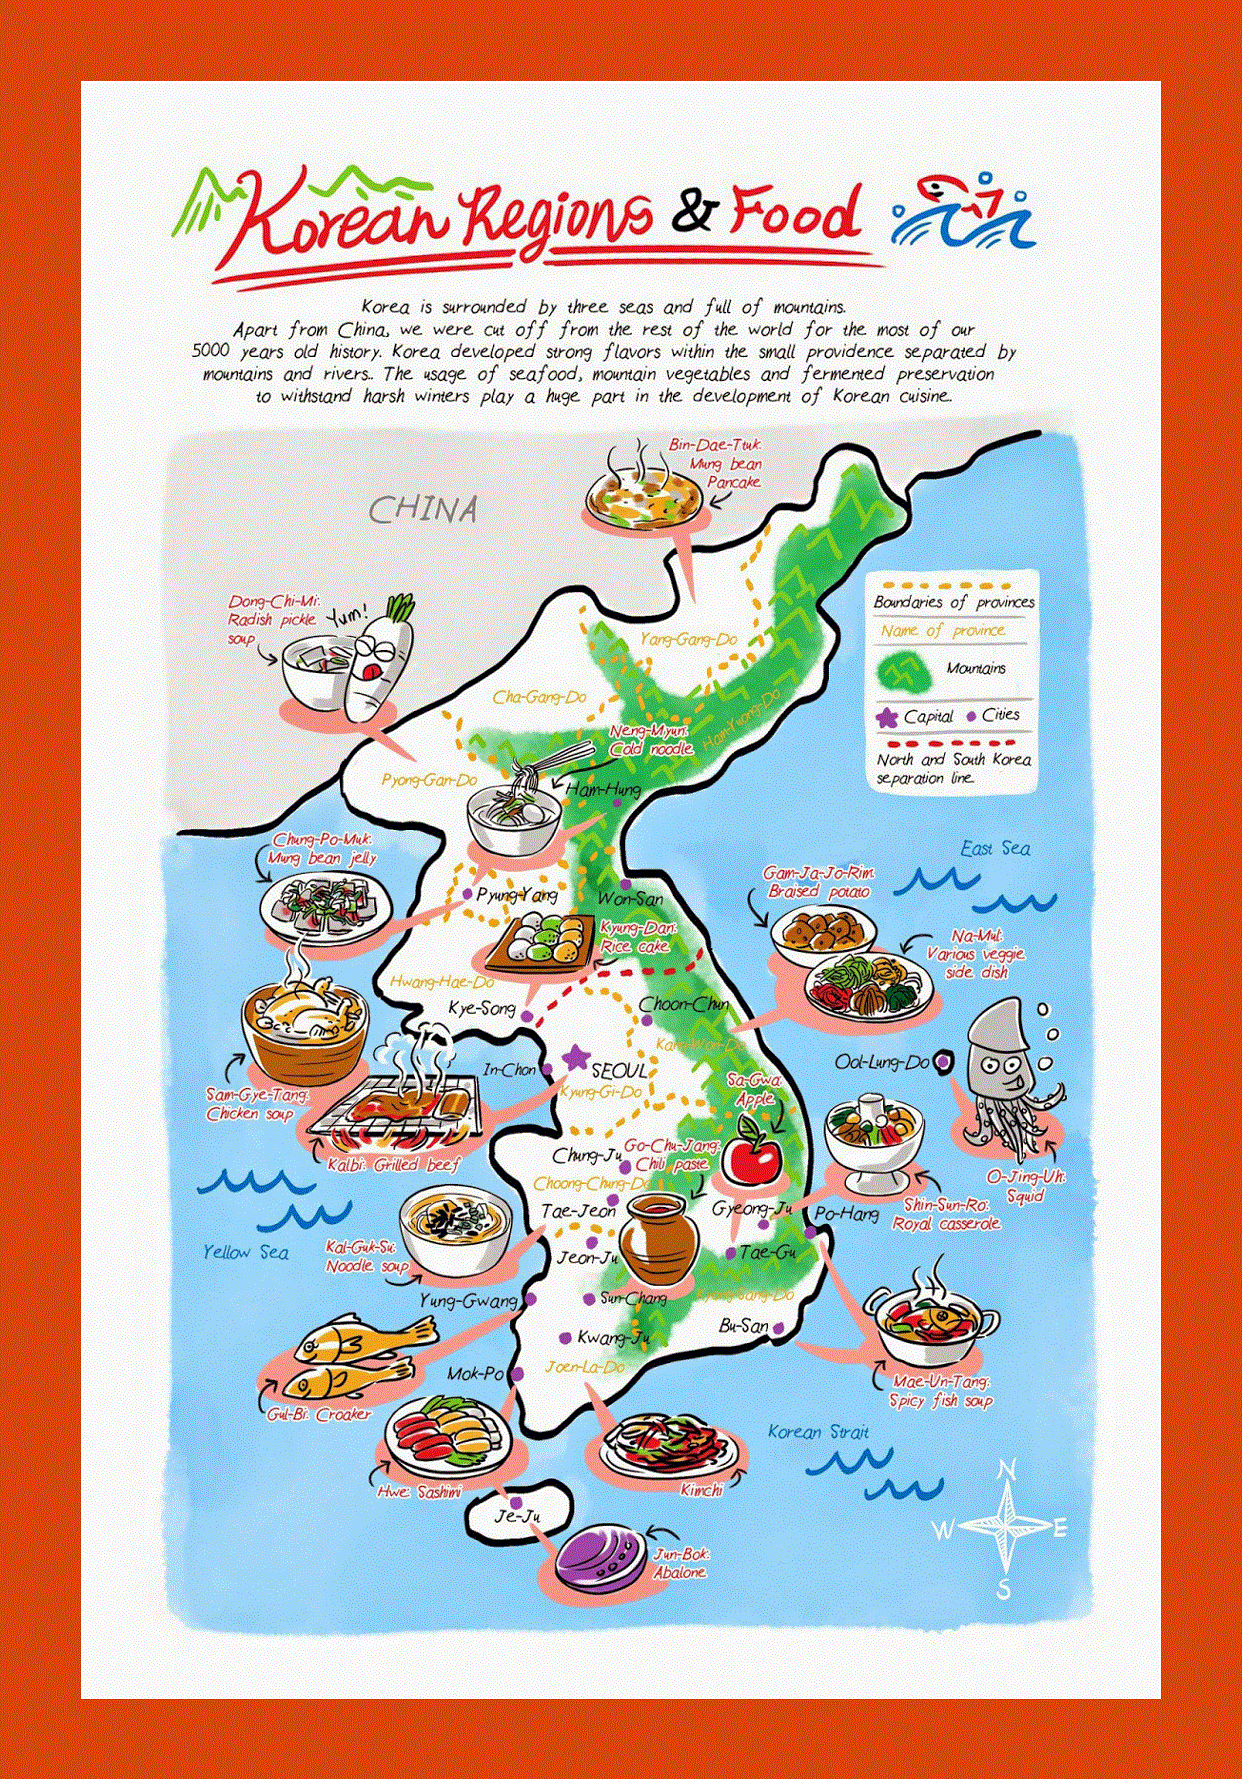 Korean Food Regions illustrated map